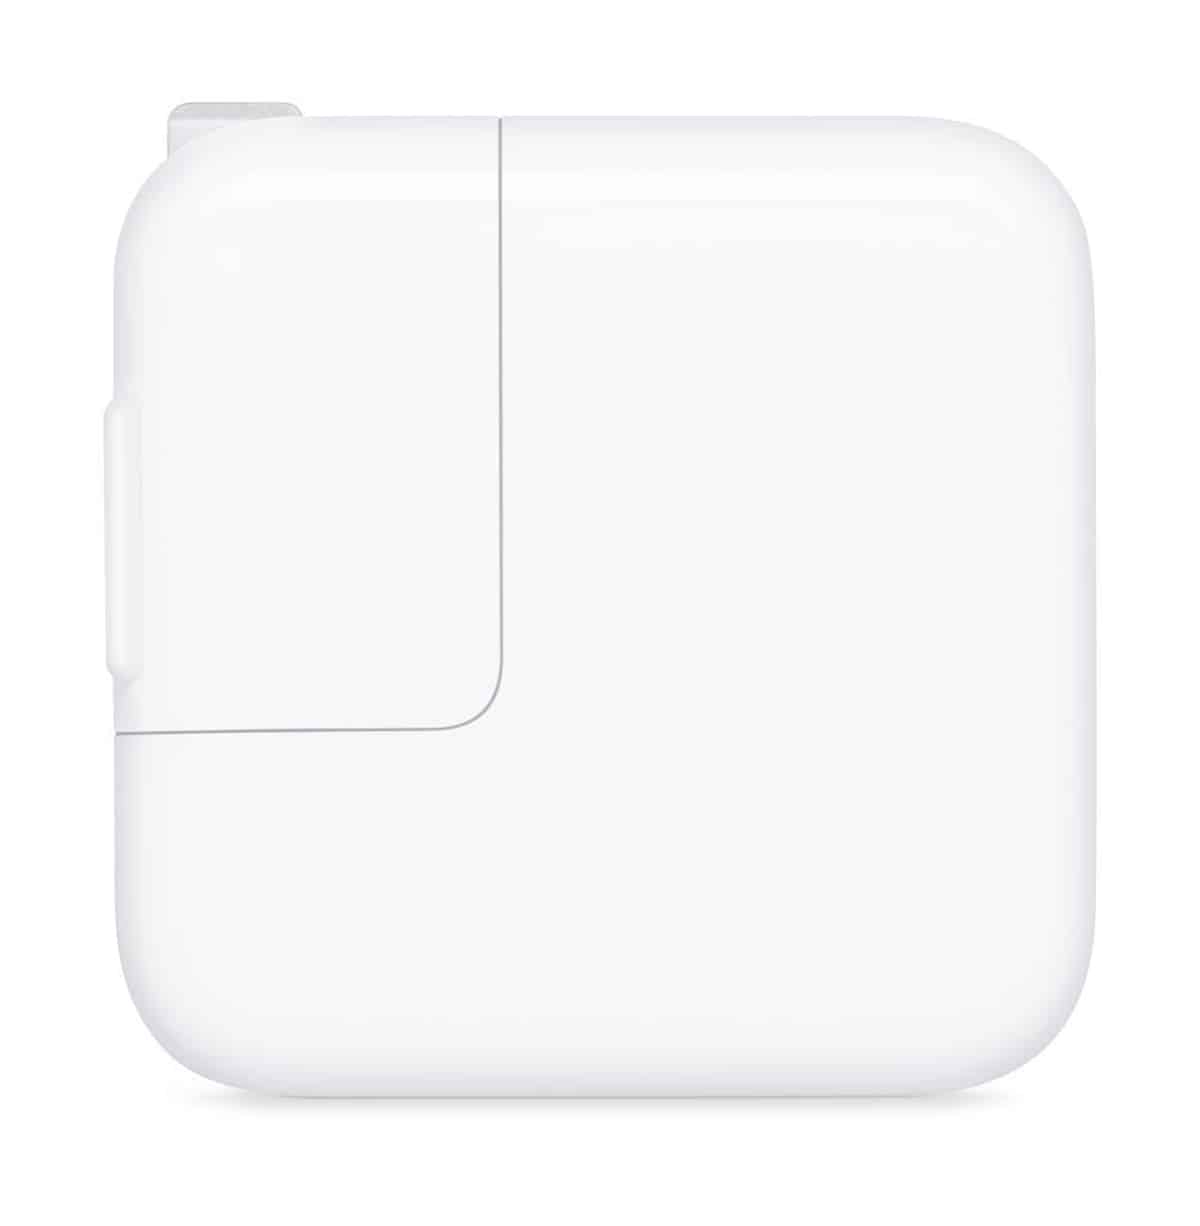 Apple USB Power Adapter | Essential iPad Accessories